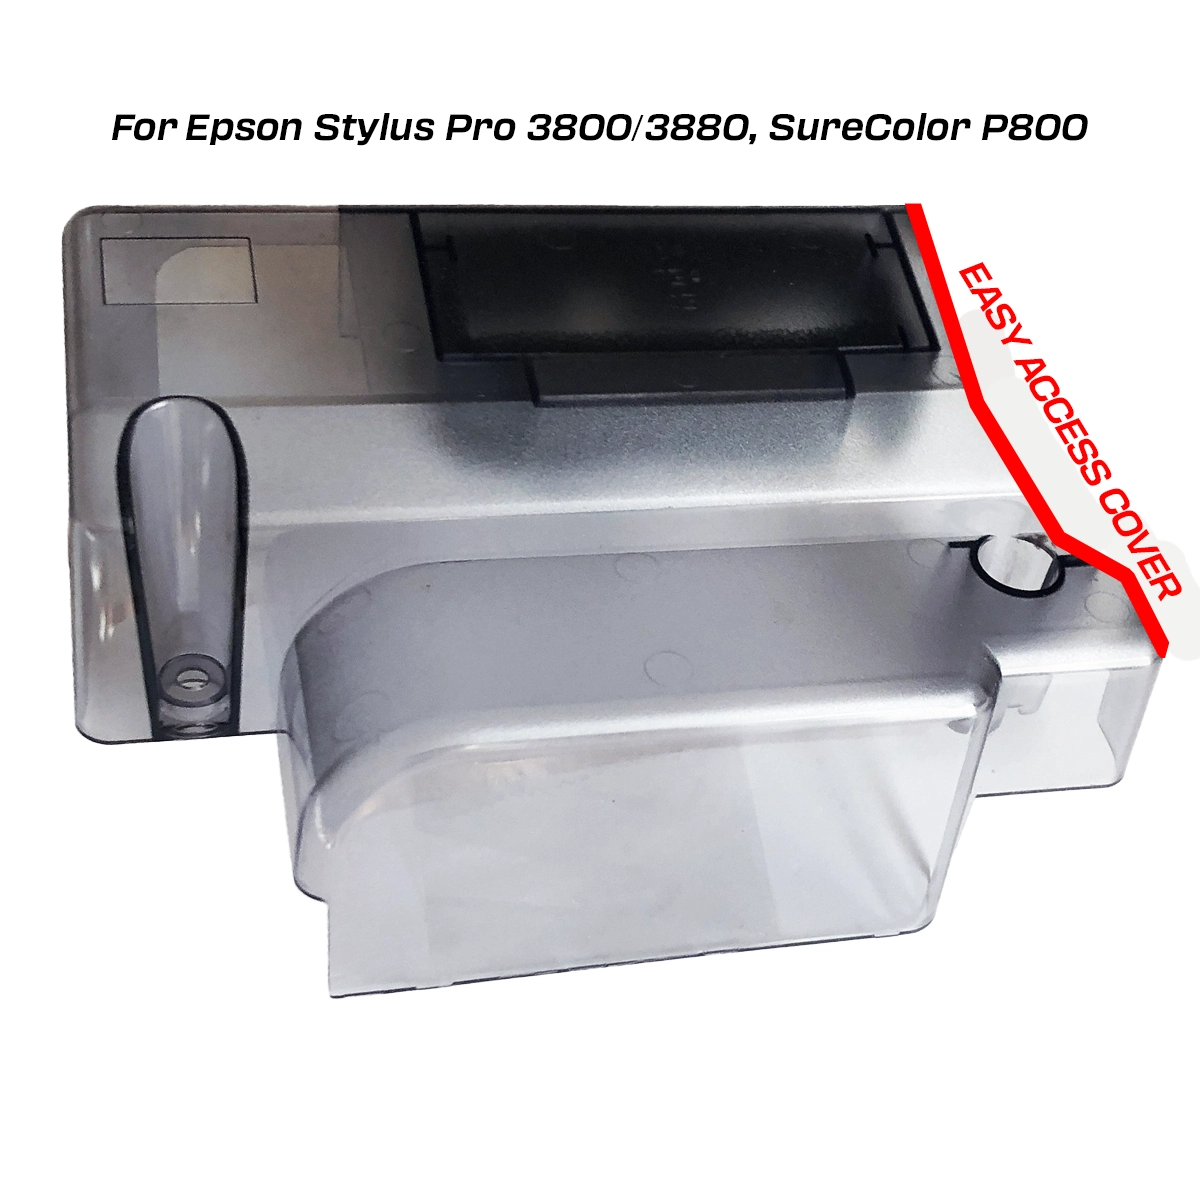 epson stylus pro 3800 3880 surecolor p800 printer printhead cover modified easy access